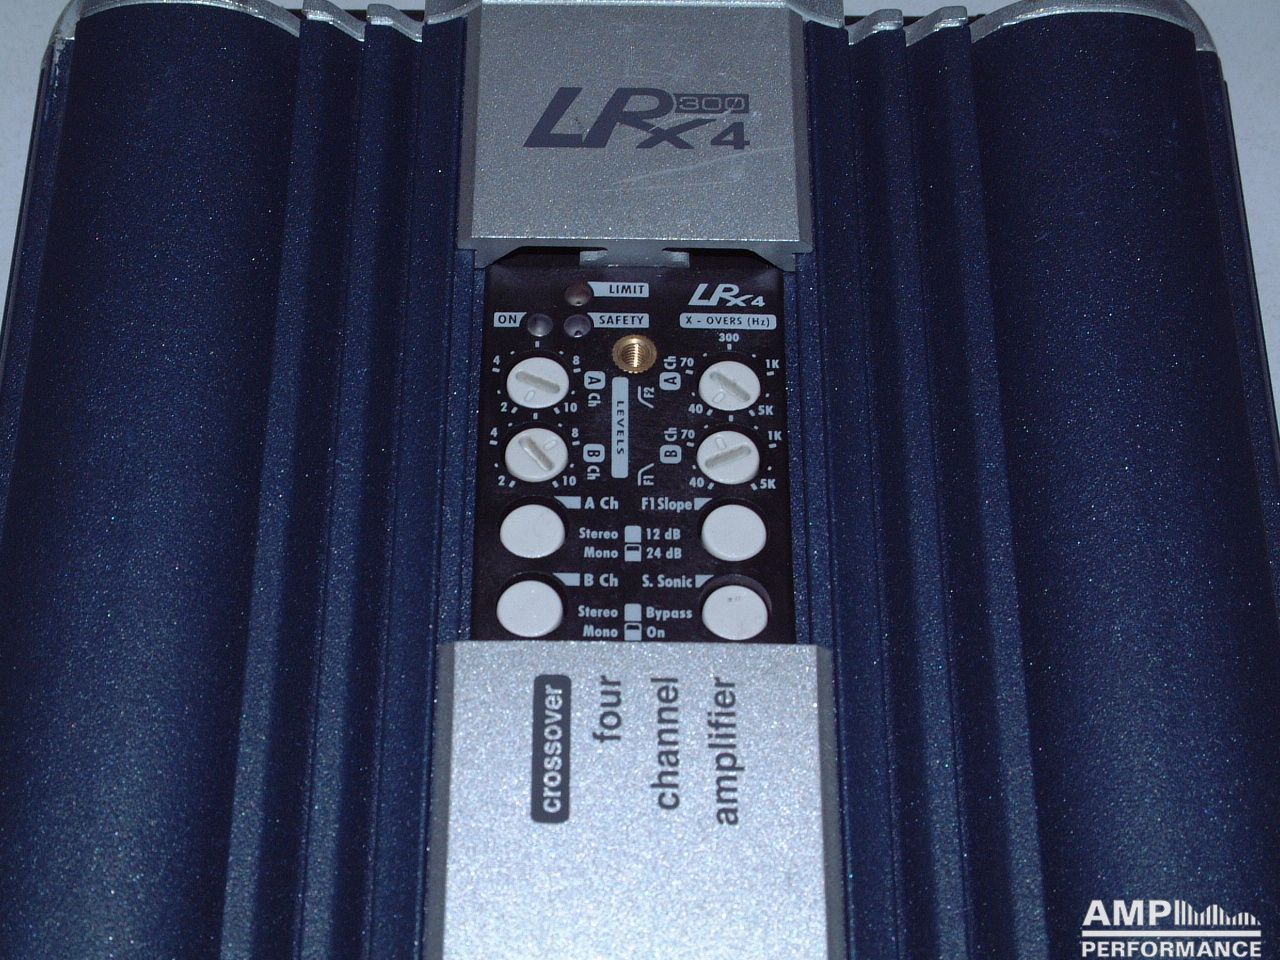 Audison LRX4.300 - AMP Performance